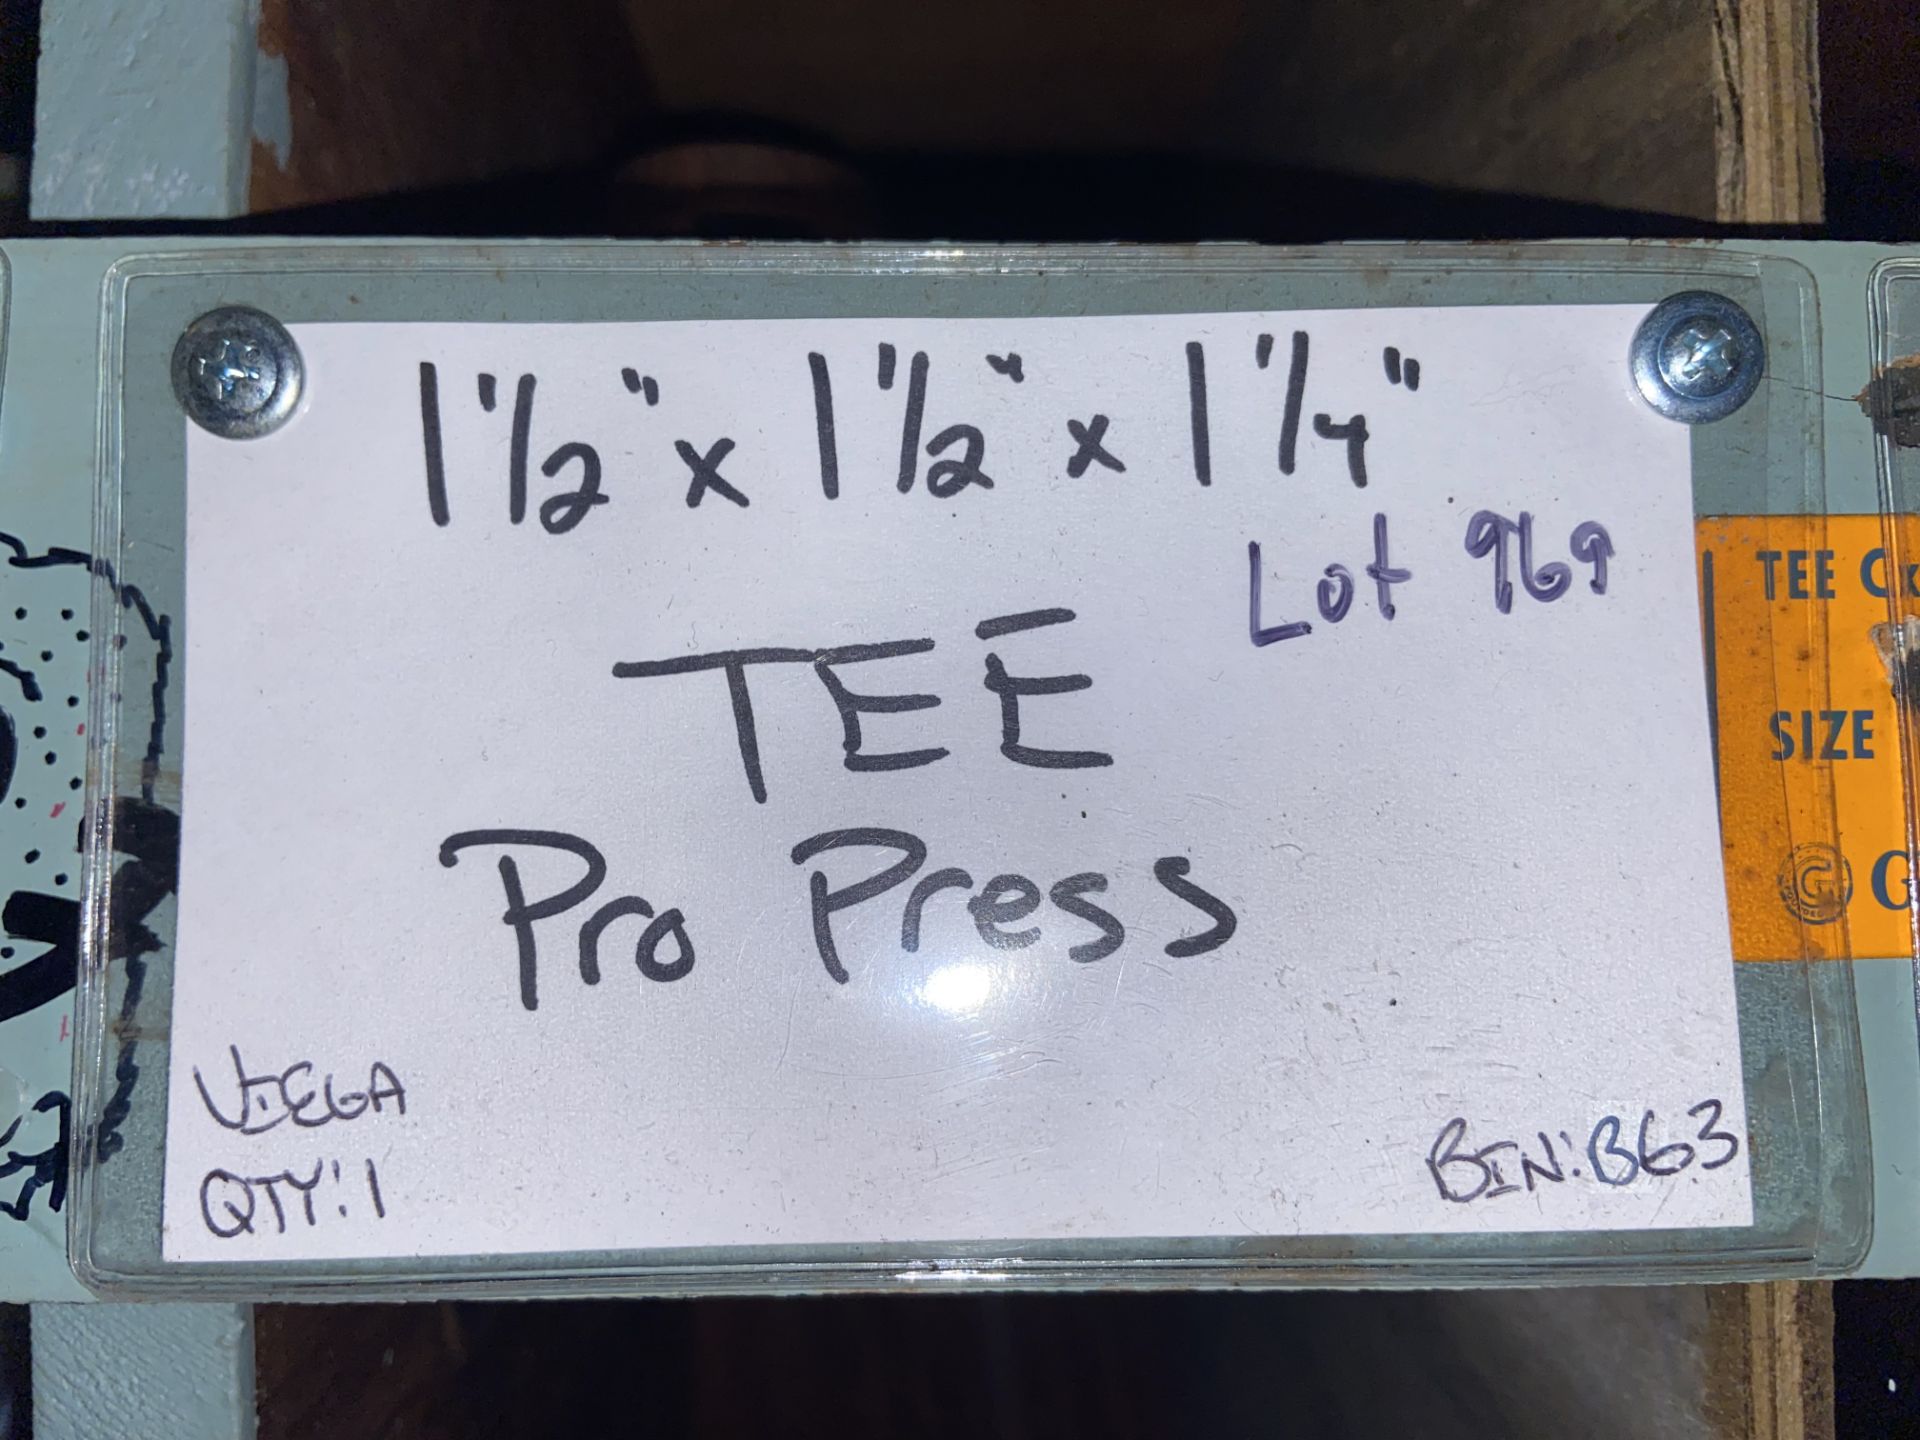 (1) VIEGA 2”x1 1/2” x 1 1/4” Tee Pro Press; (2) NIBCO 1 1/4” 1 1/4”x 1/2” Tee Pro Press; VIEGA (1) - Image 14 of 33